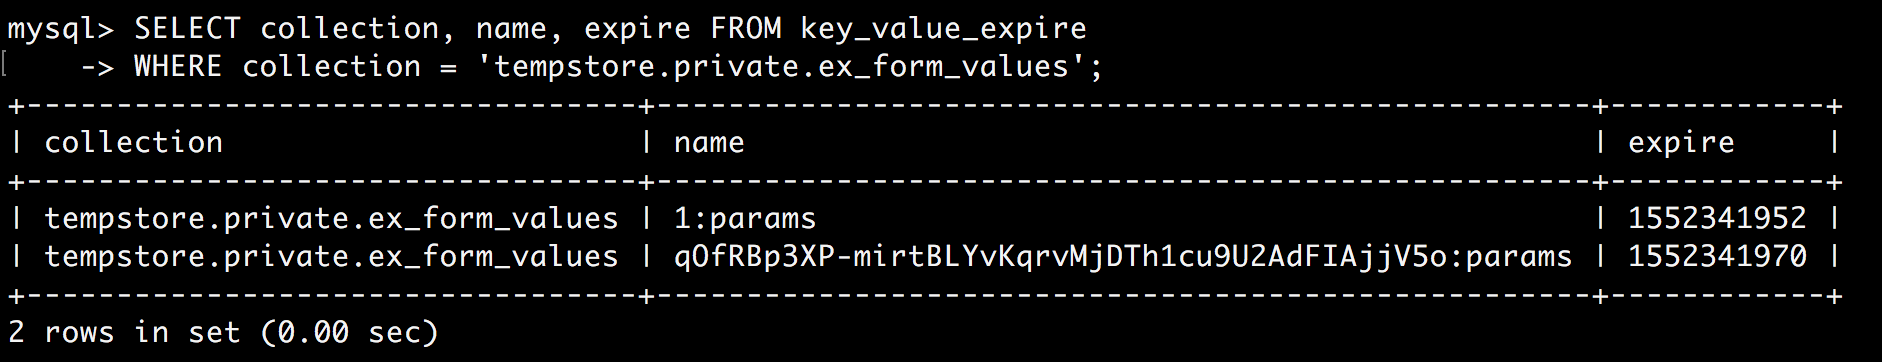 key_value_expire-drupal8